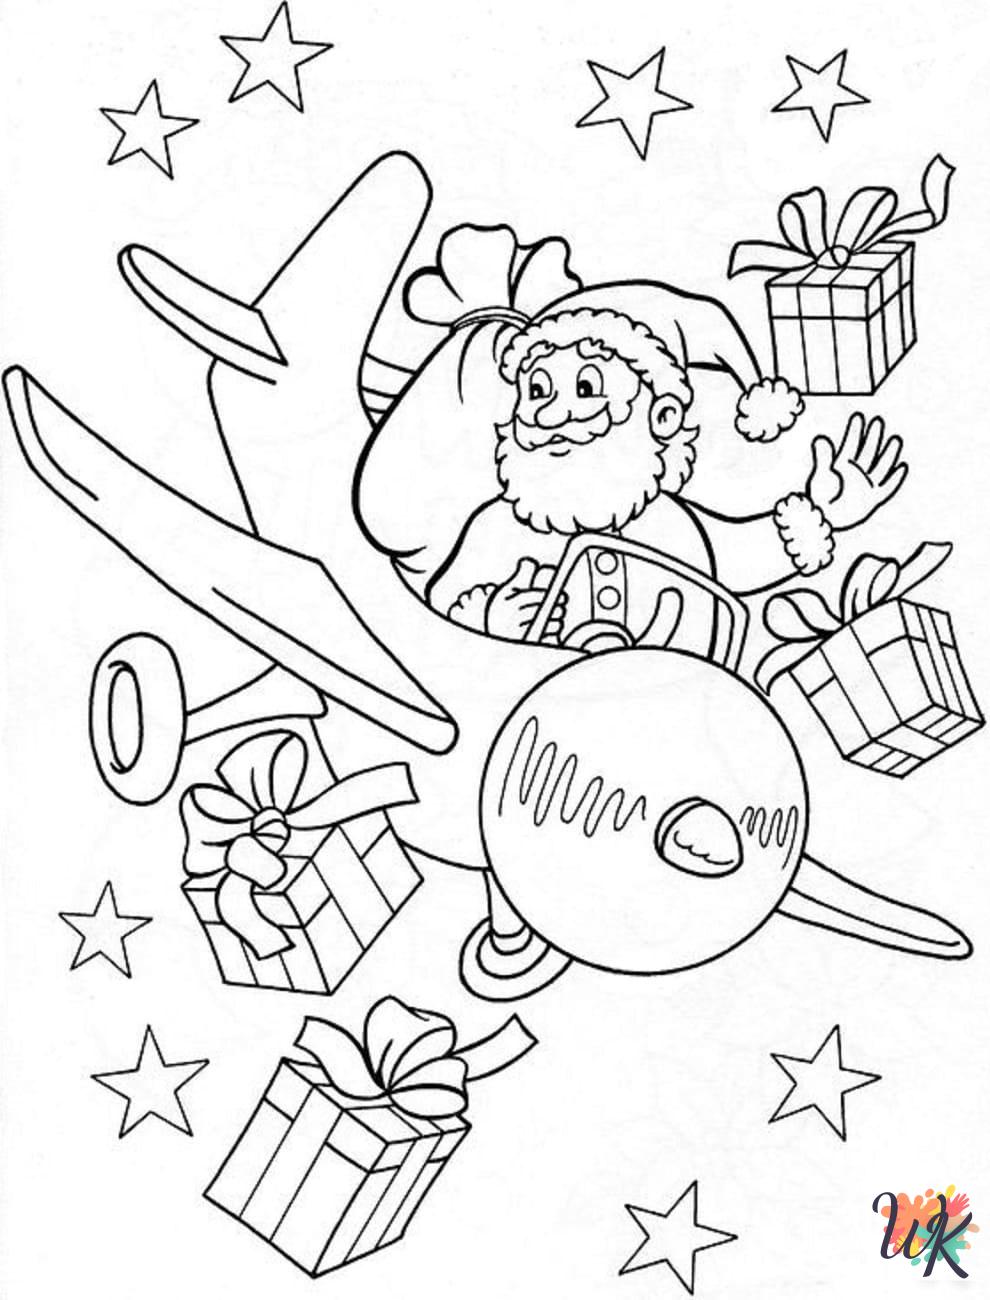 Santa free coloring pages